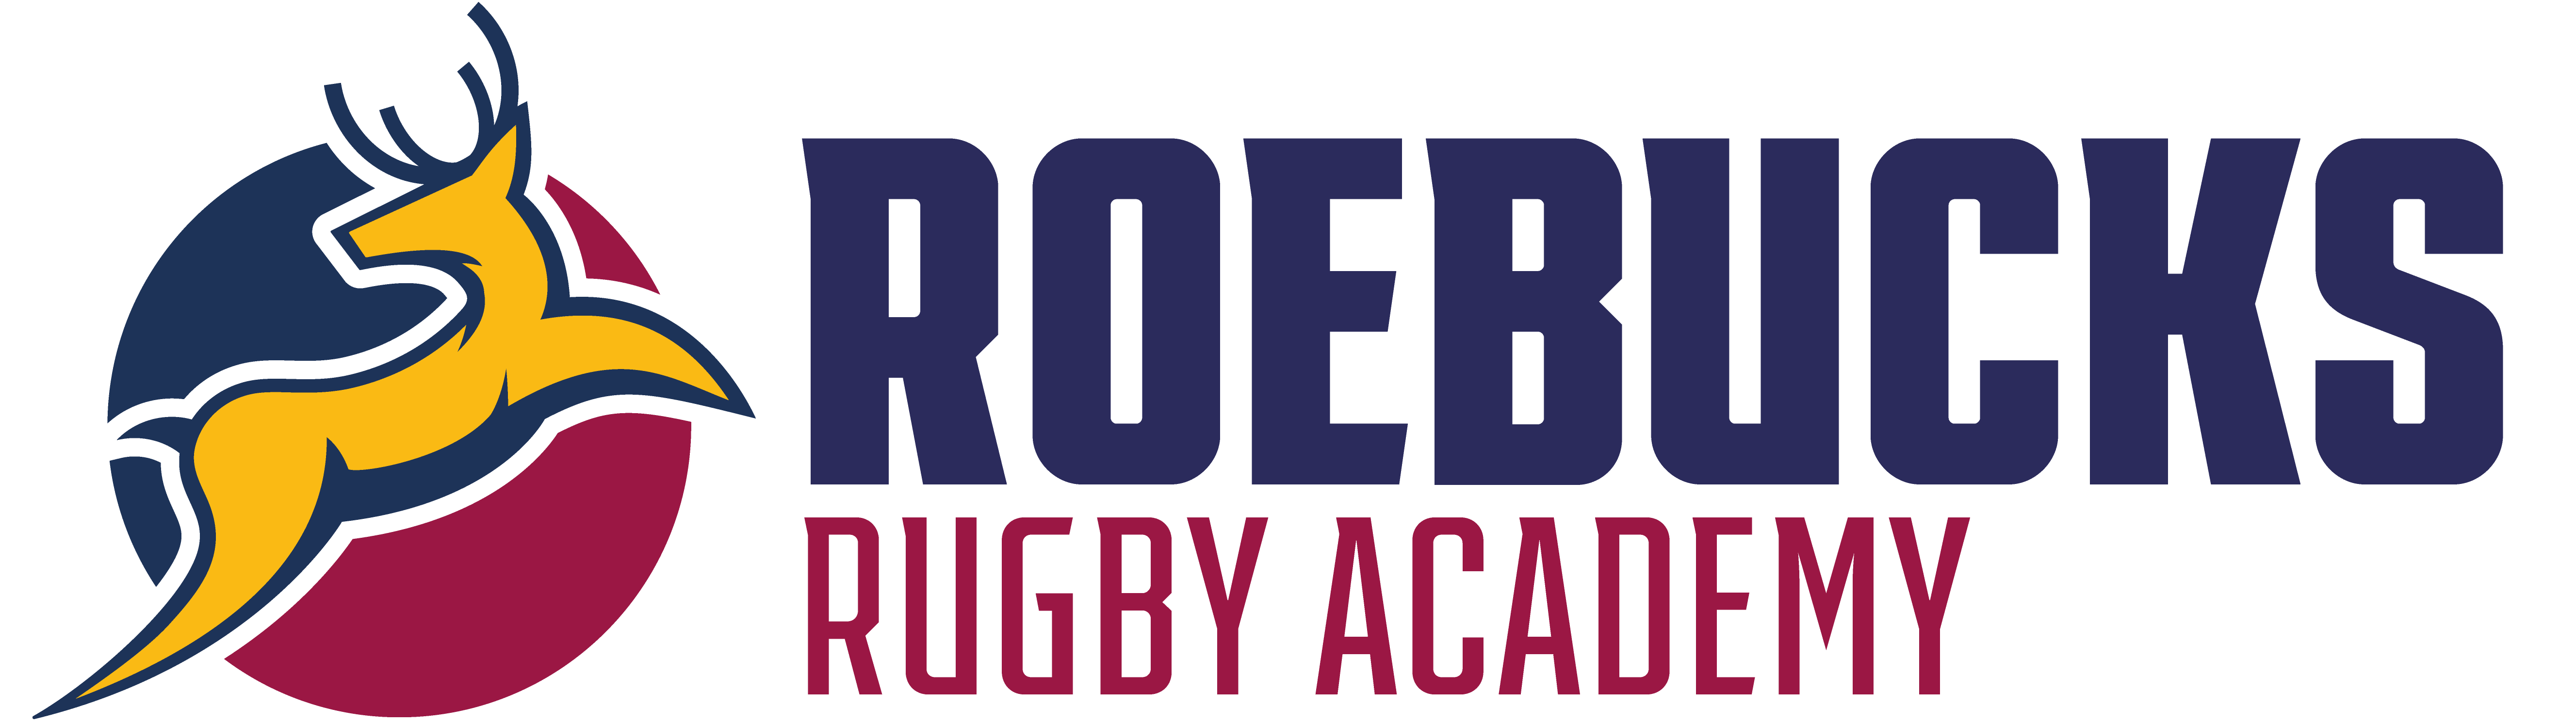 Roebucks Rugby Academy